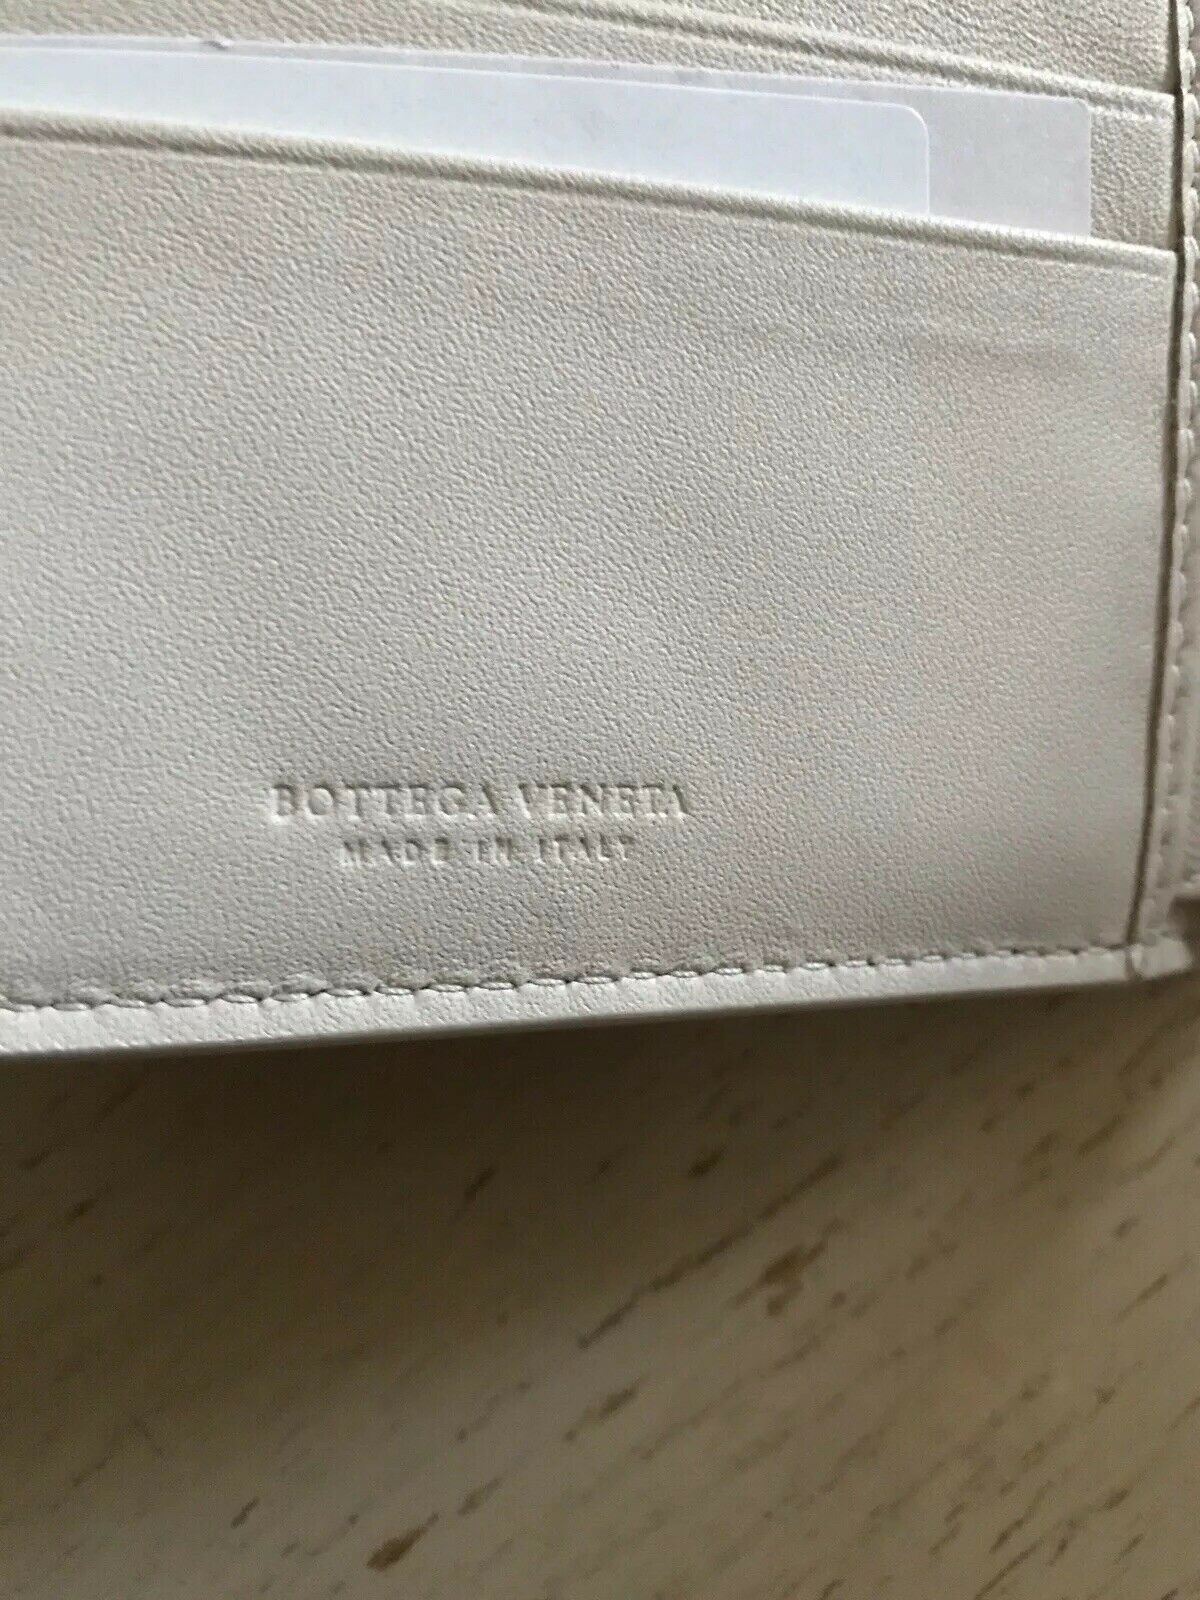 New Bottega Veneta Mens Wallet Orange/Black 113993 Italy